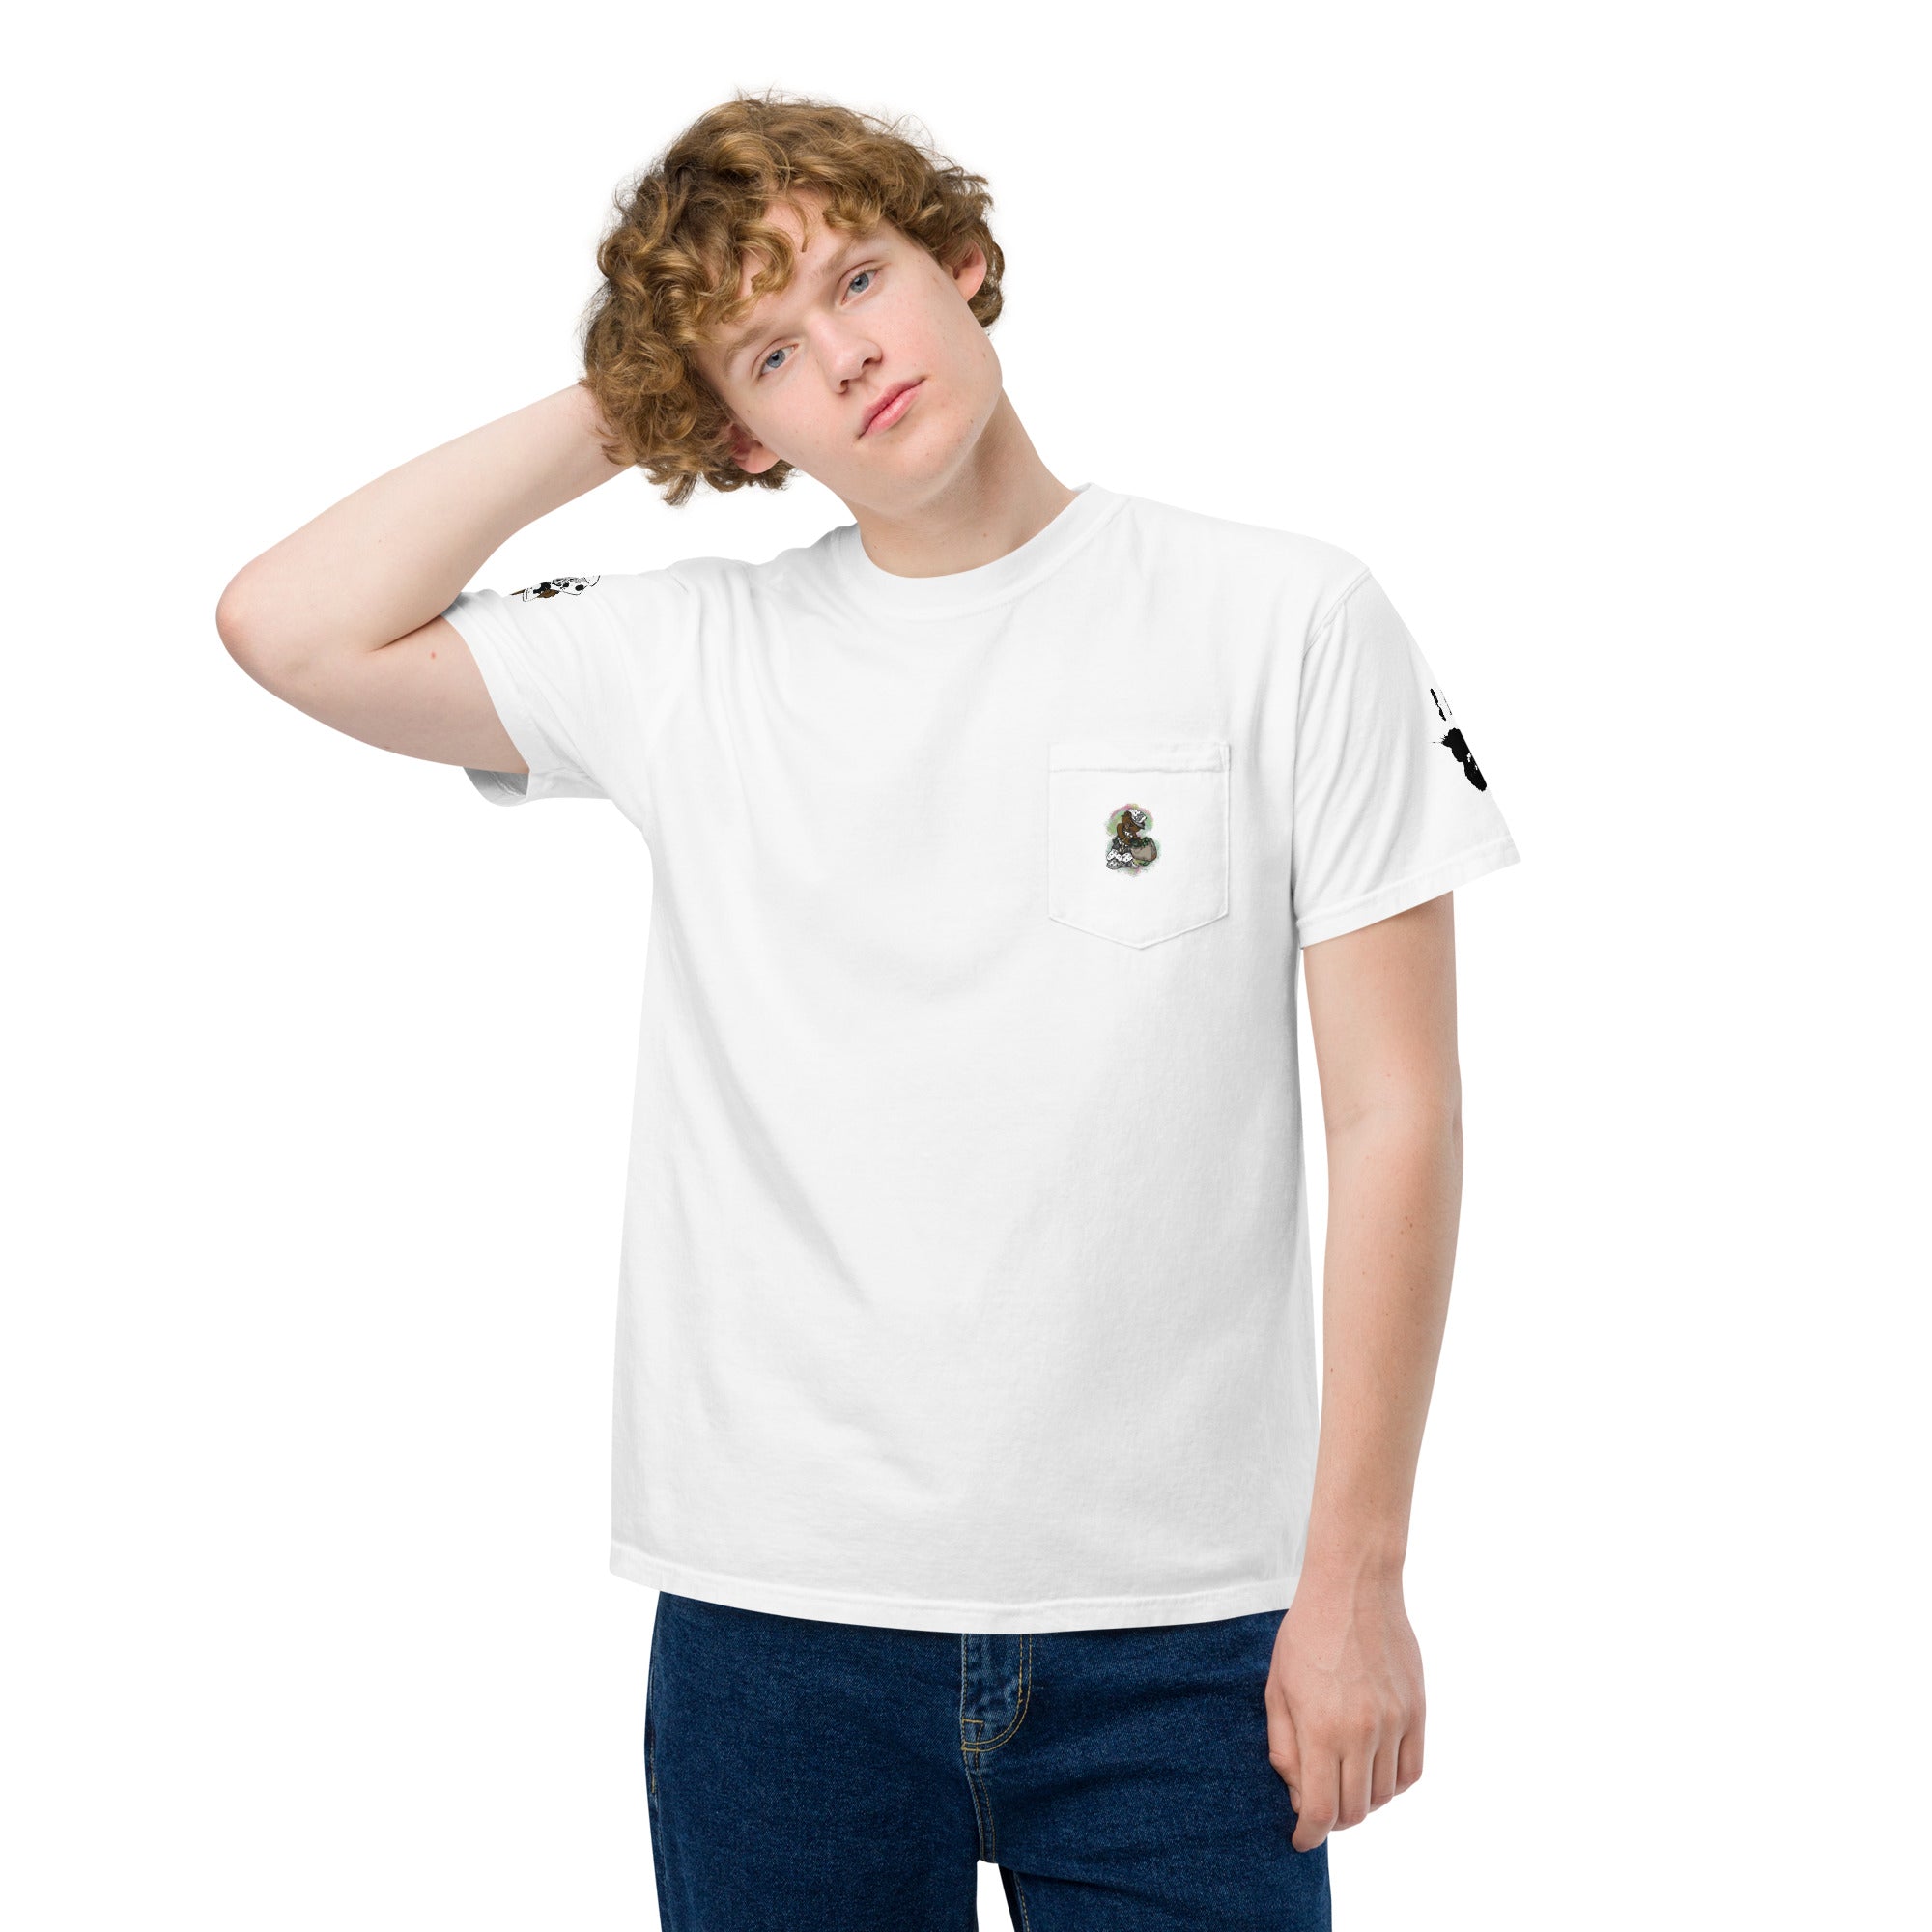 MONEY BEAR Unisex LV Charm garment-dyed pocket t-shirt